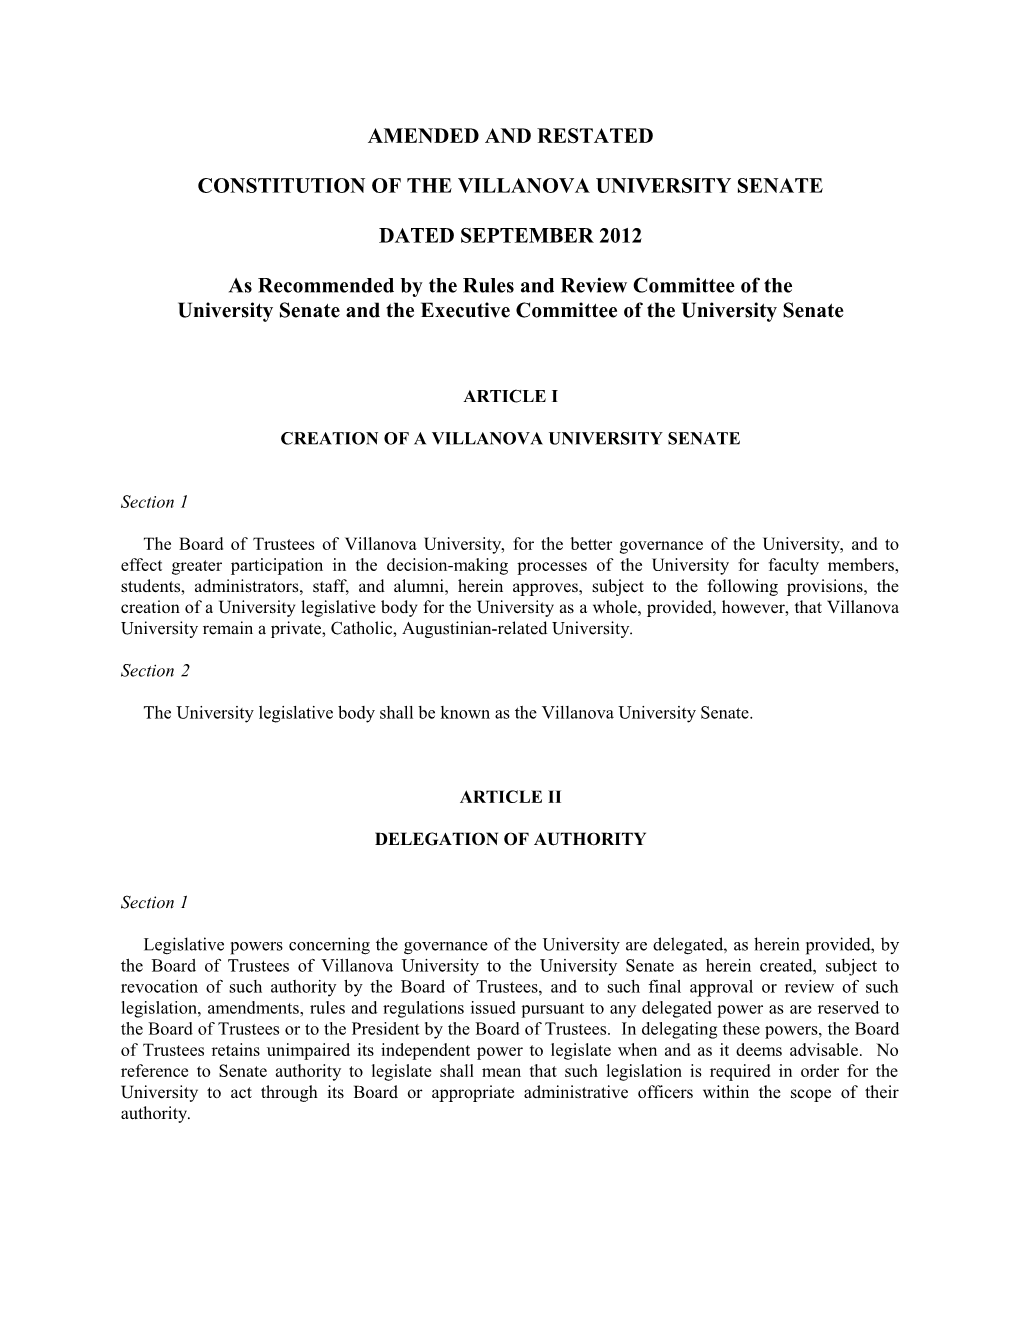 Constitution of the Villanova University Senate